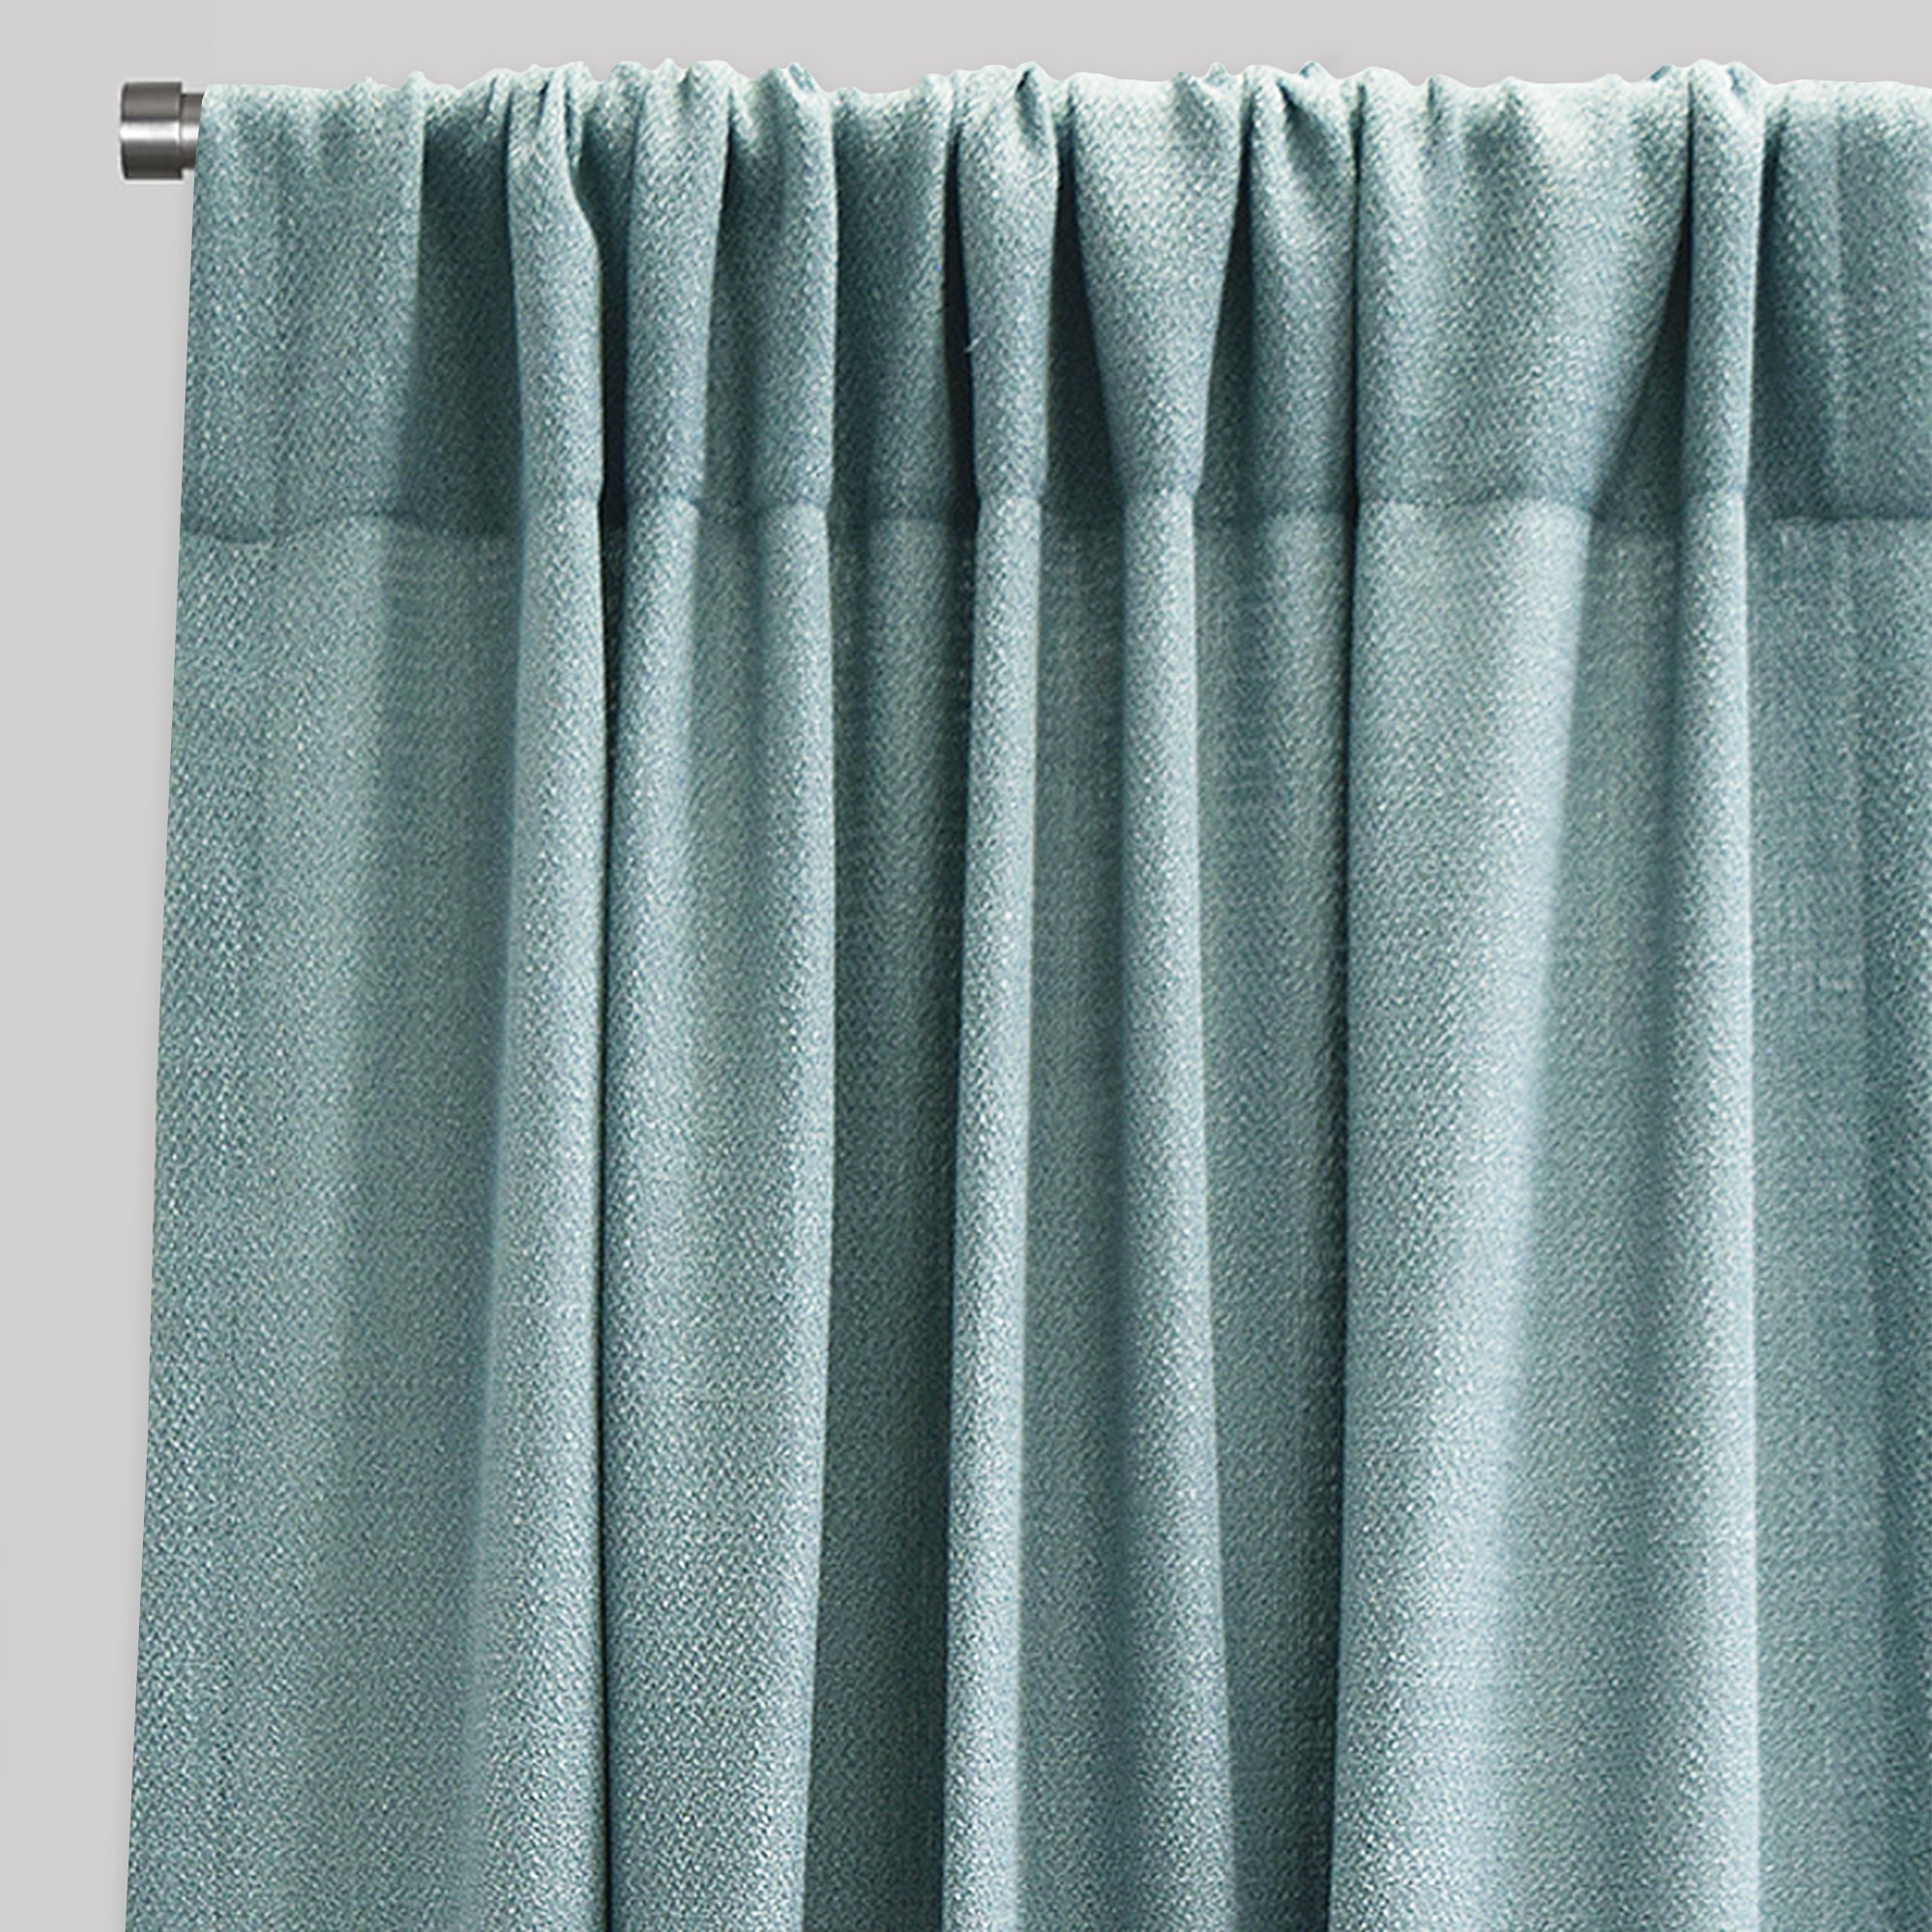 Reno Curtain Panels | Solid Linen Look